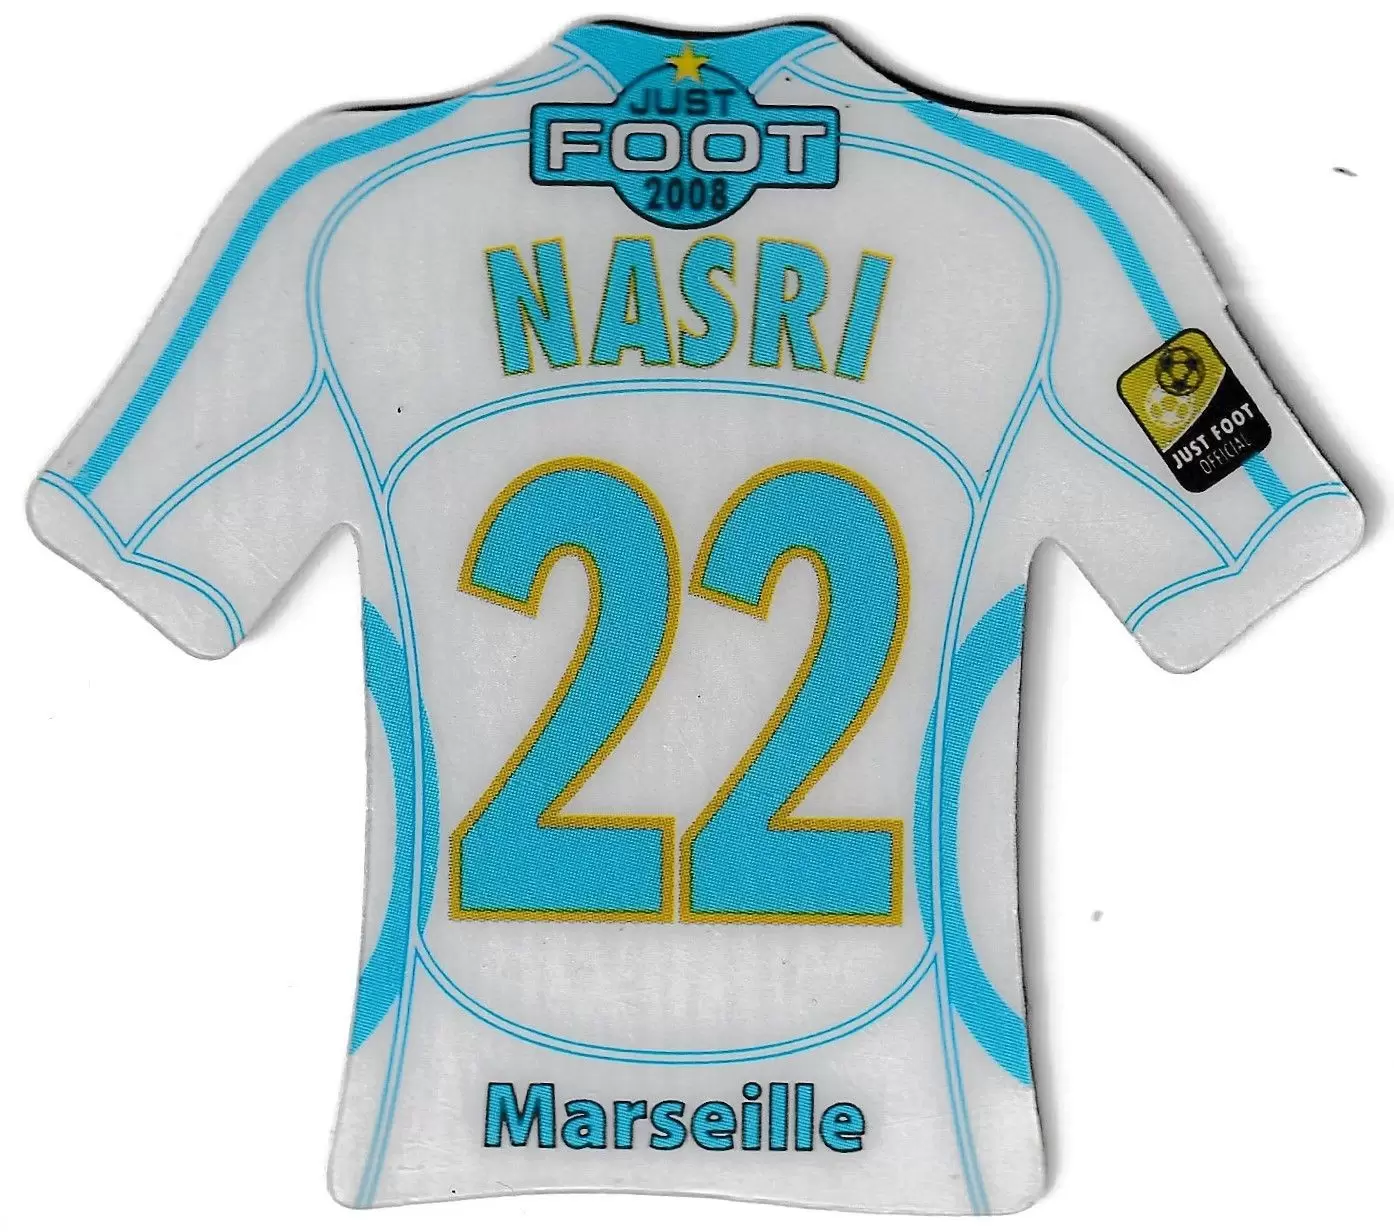 Just Foot 2008 - Marseille 22 - Nasri